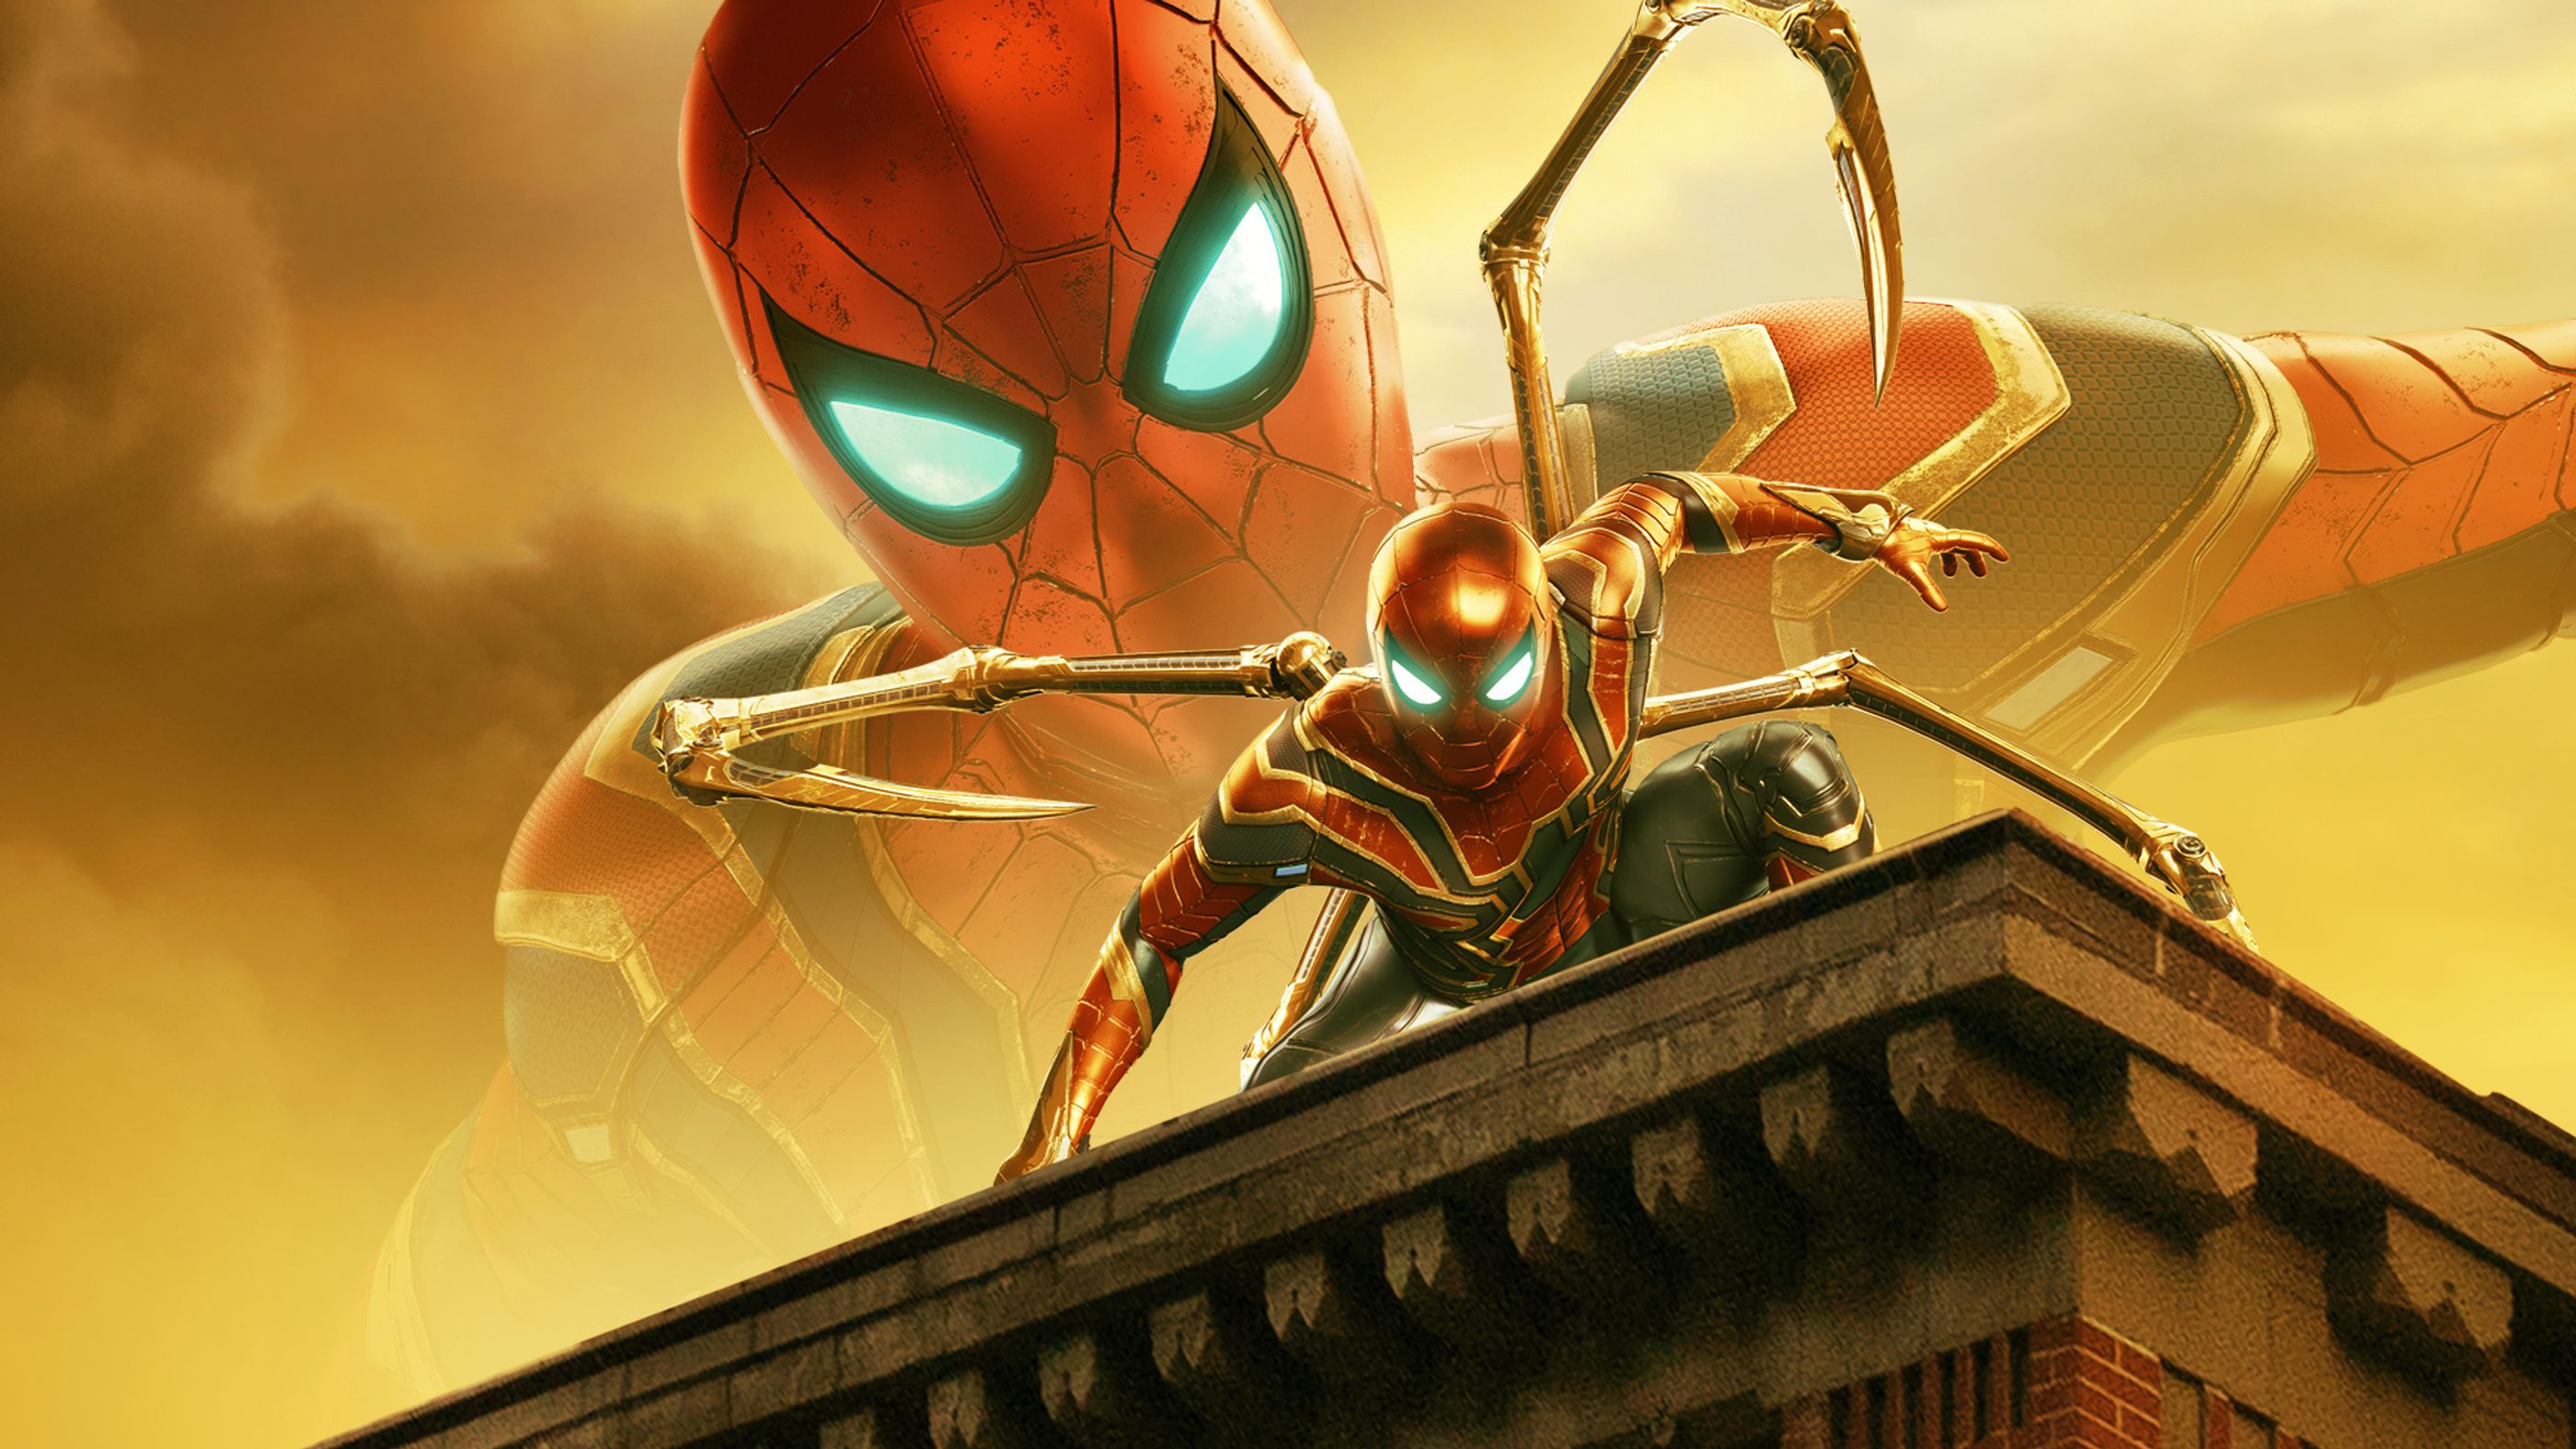 Full Movie Online Free Vodkalocker Full Download Spider-Man Far From Home#  Online Free Movie HQ